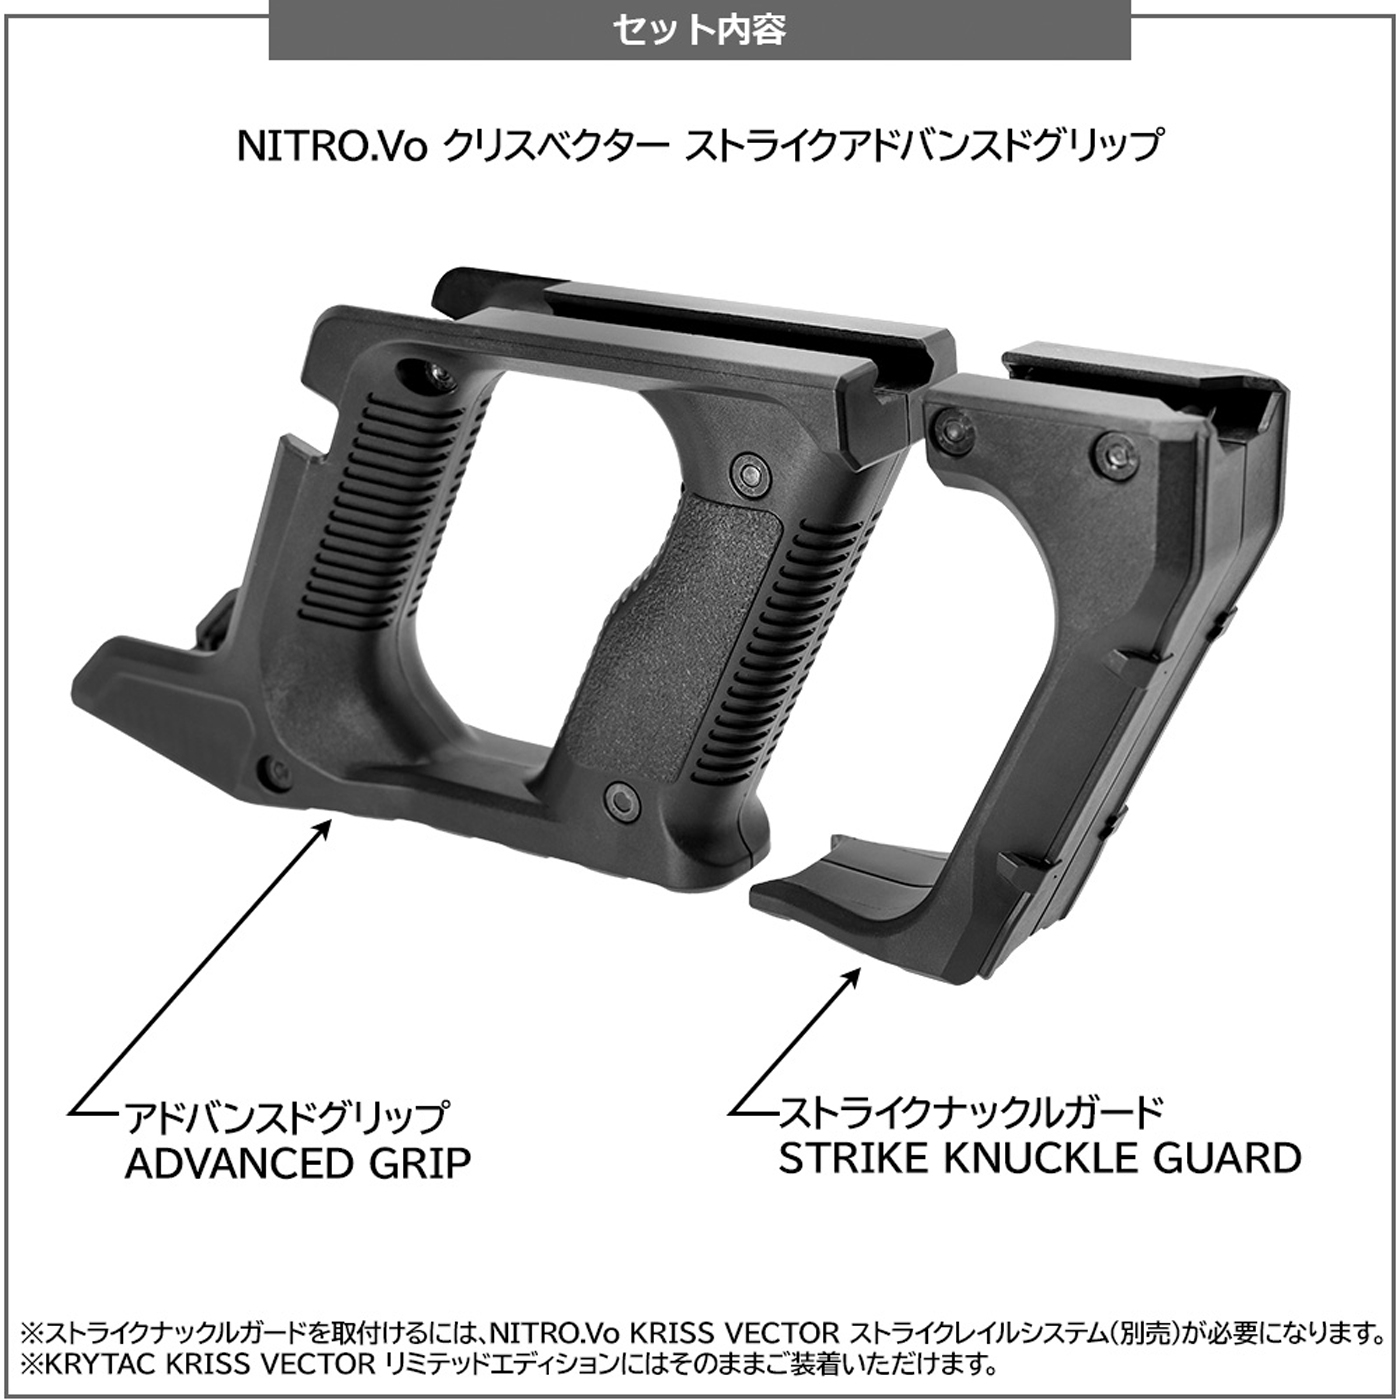 Nitro.Vo KRISS Vector Strike Knuckle Guard & Advanced Grip 04